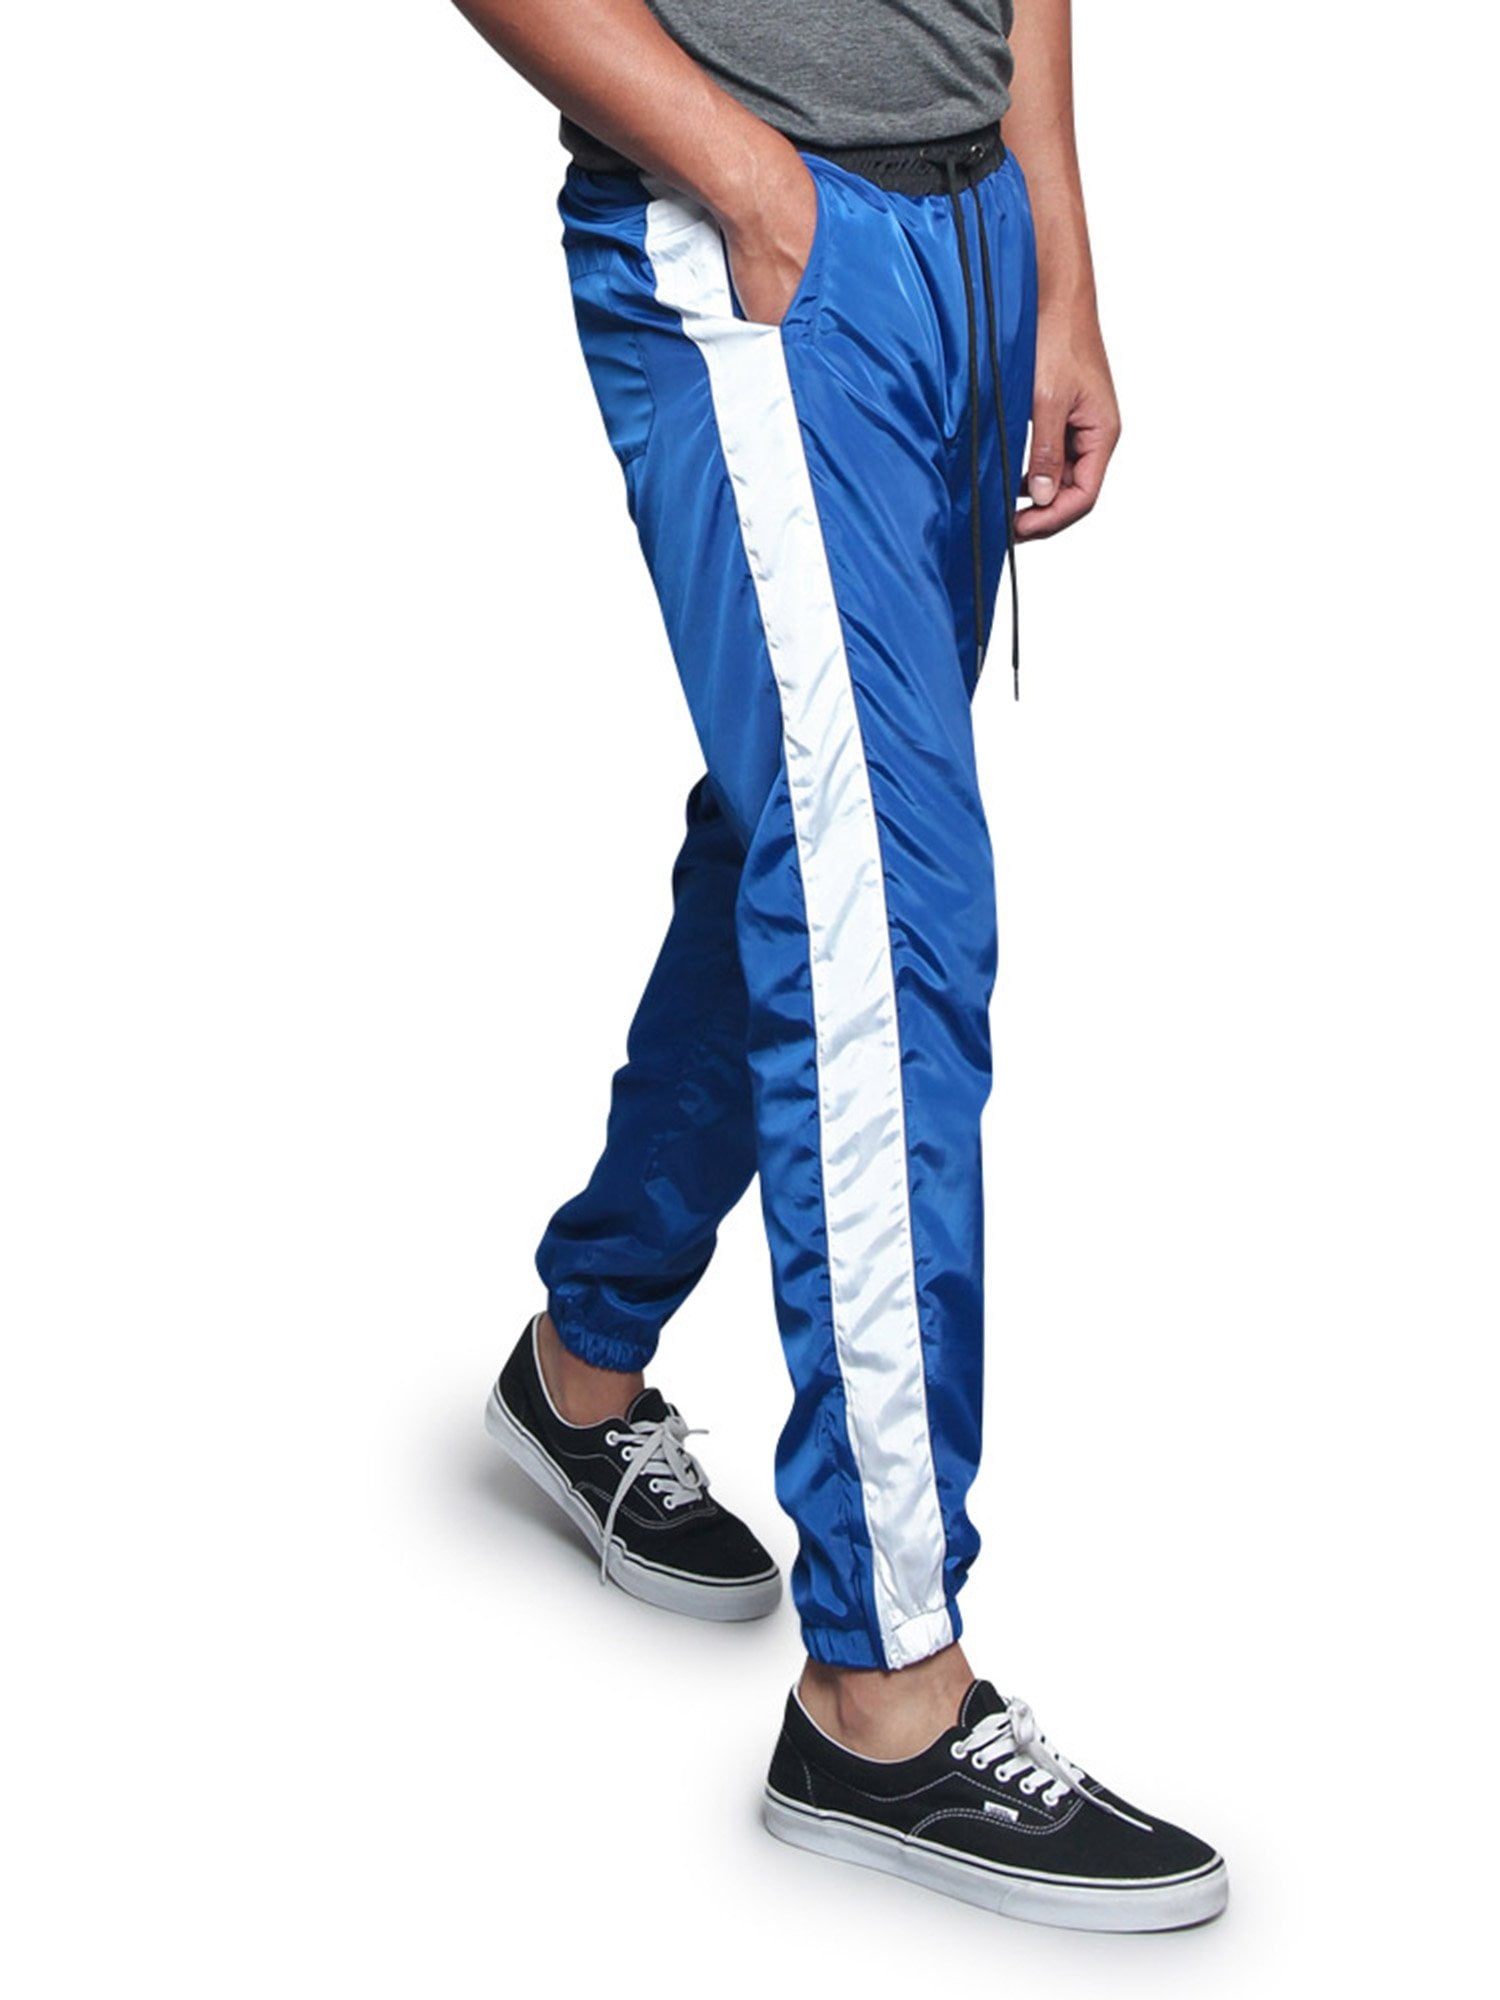 G-Style USA Men's Striped Athletic Jogging Windbreaker Track Pants TR573 -  Royal Blue - 2X-Large